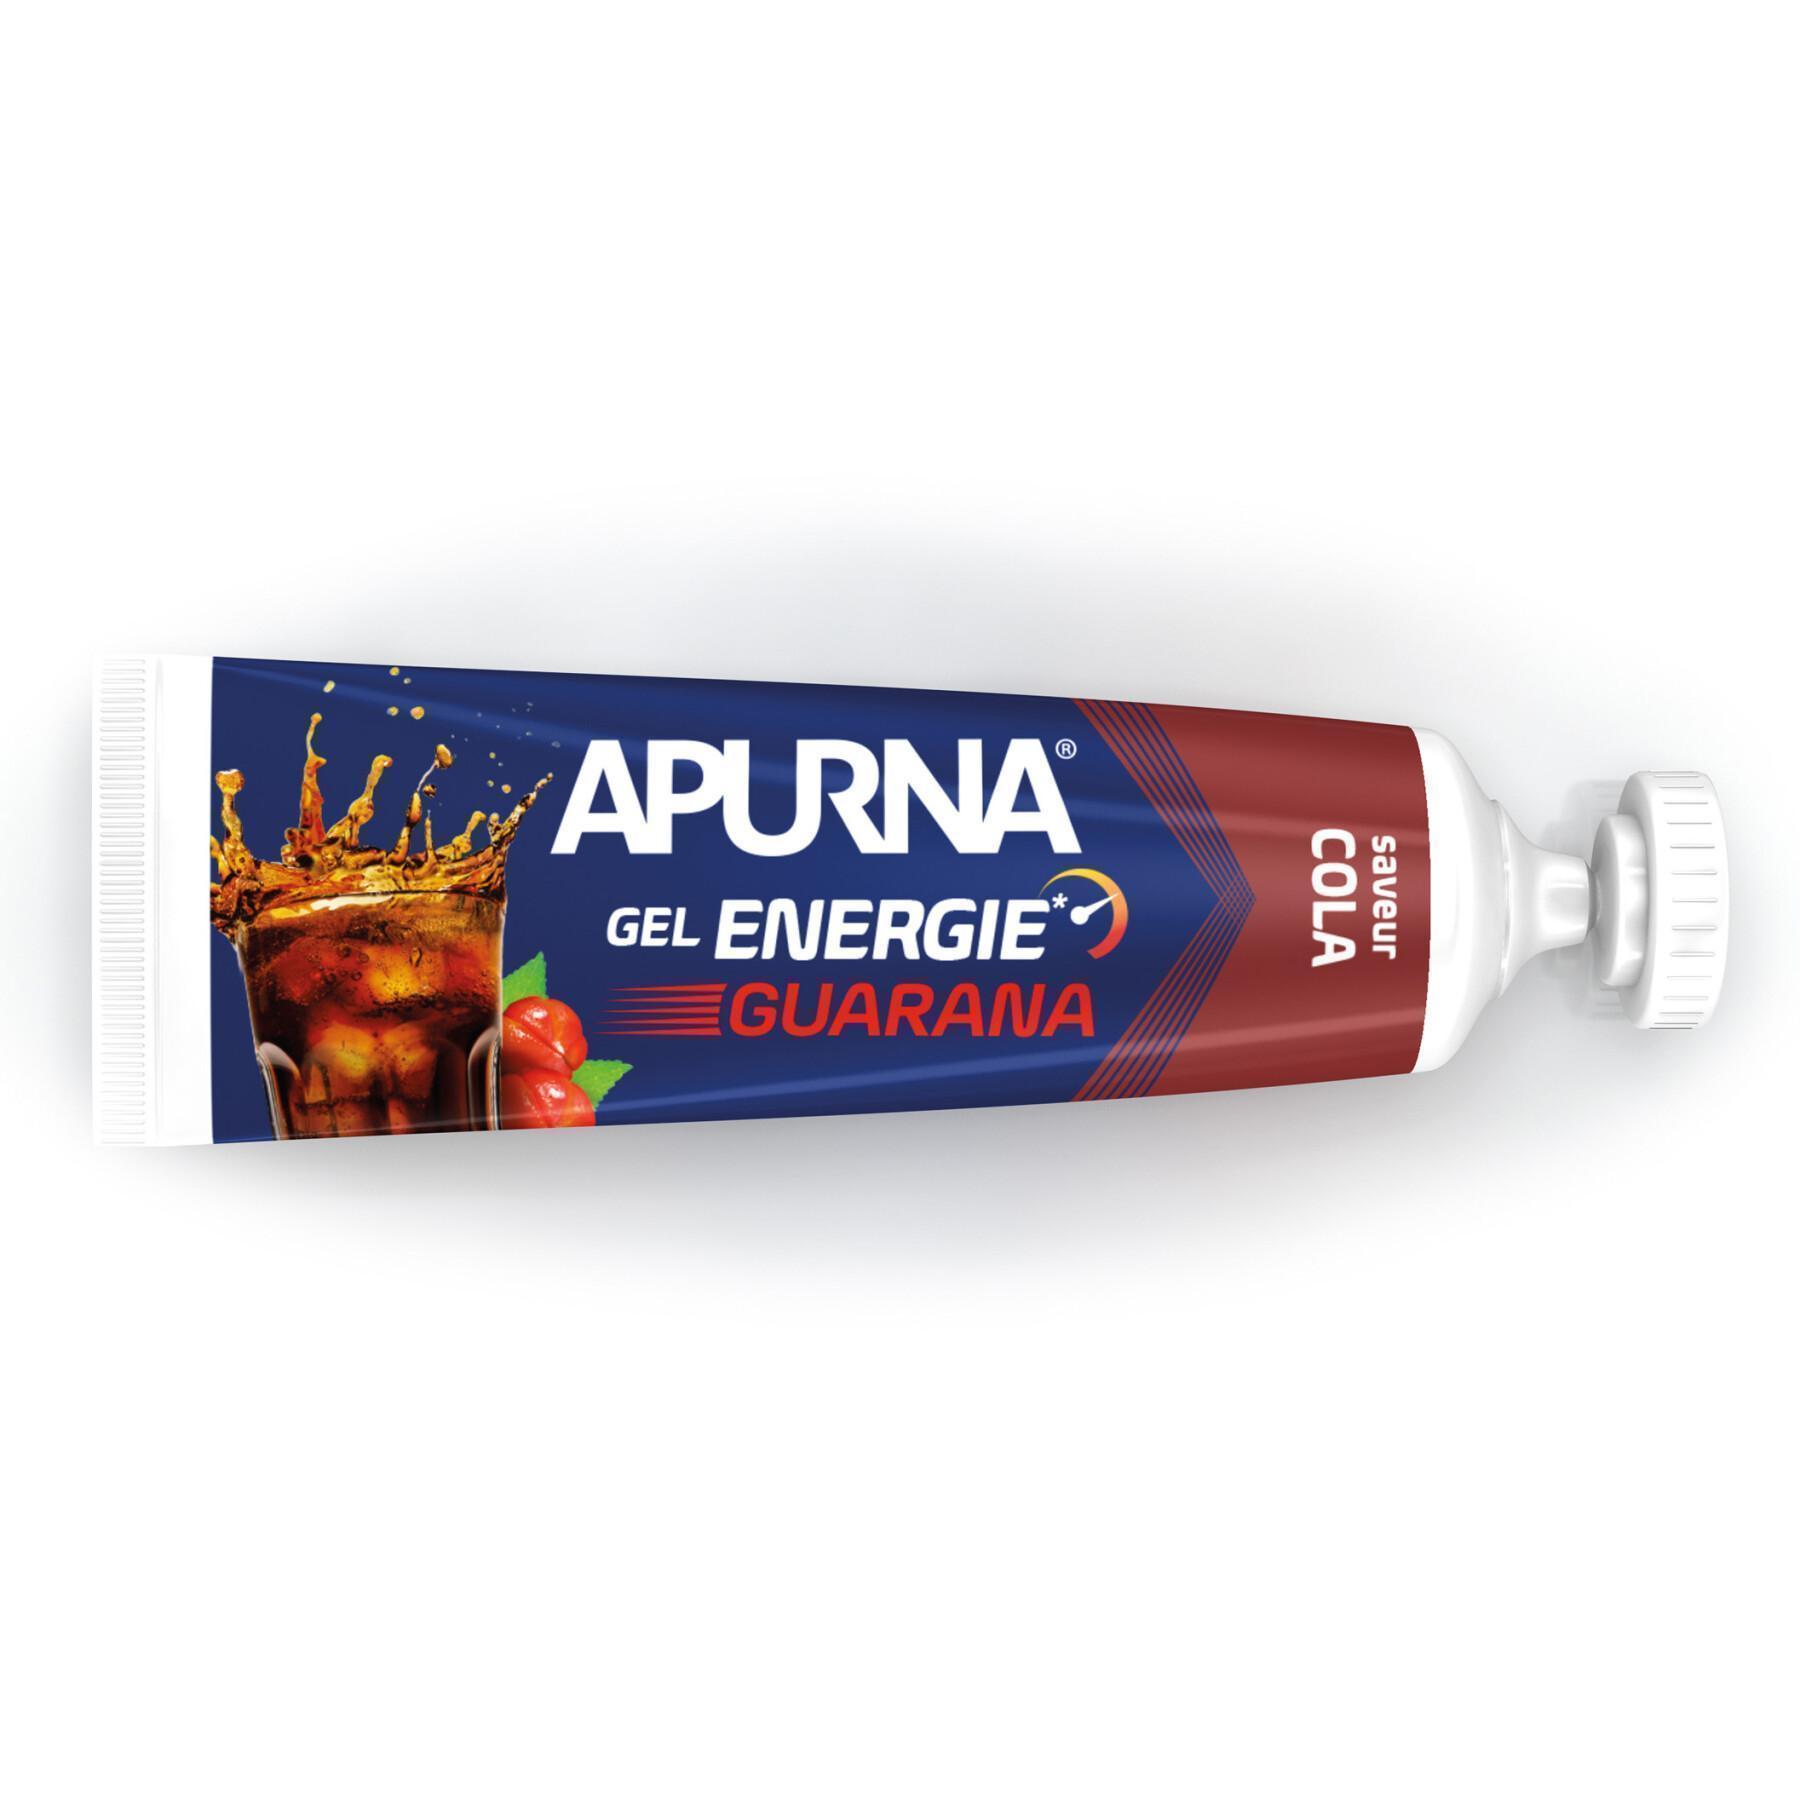 Batch of 25 gels Apurna Energie guarana cola - 35g